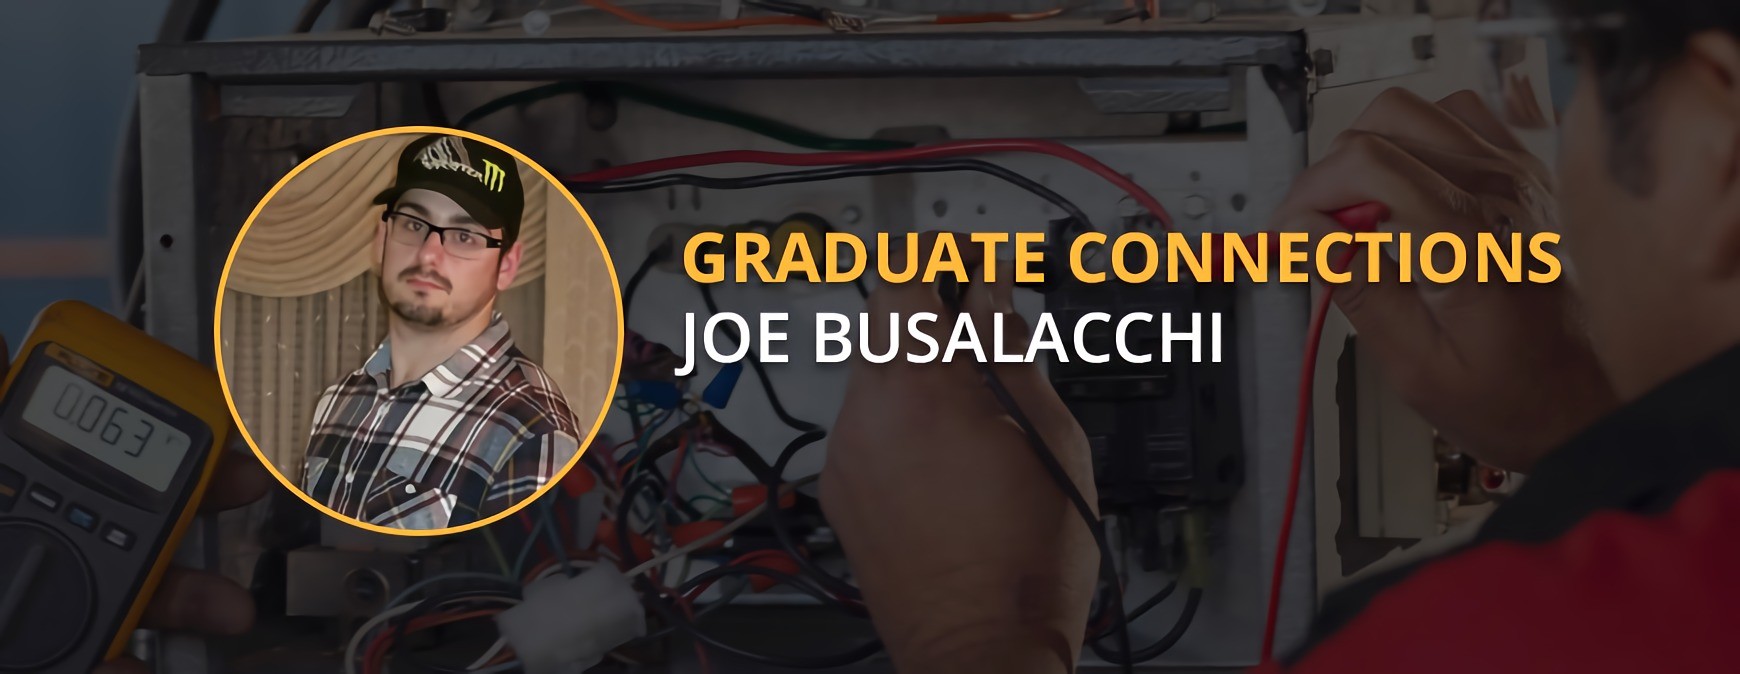 Joe Busalacchi